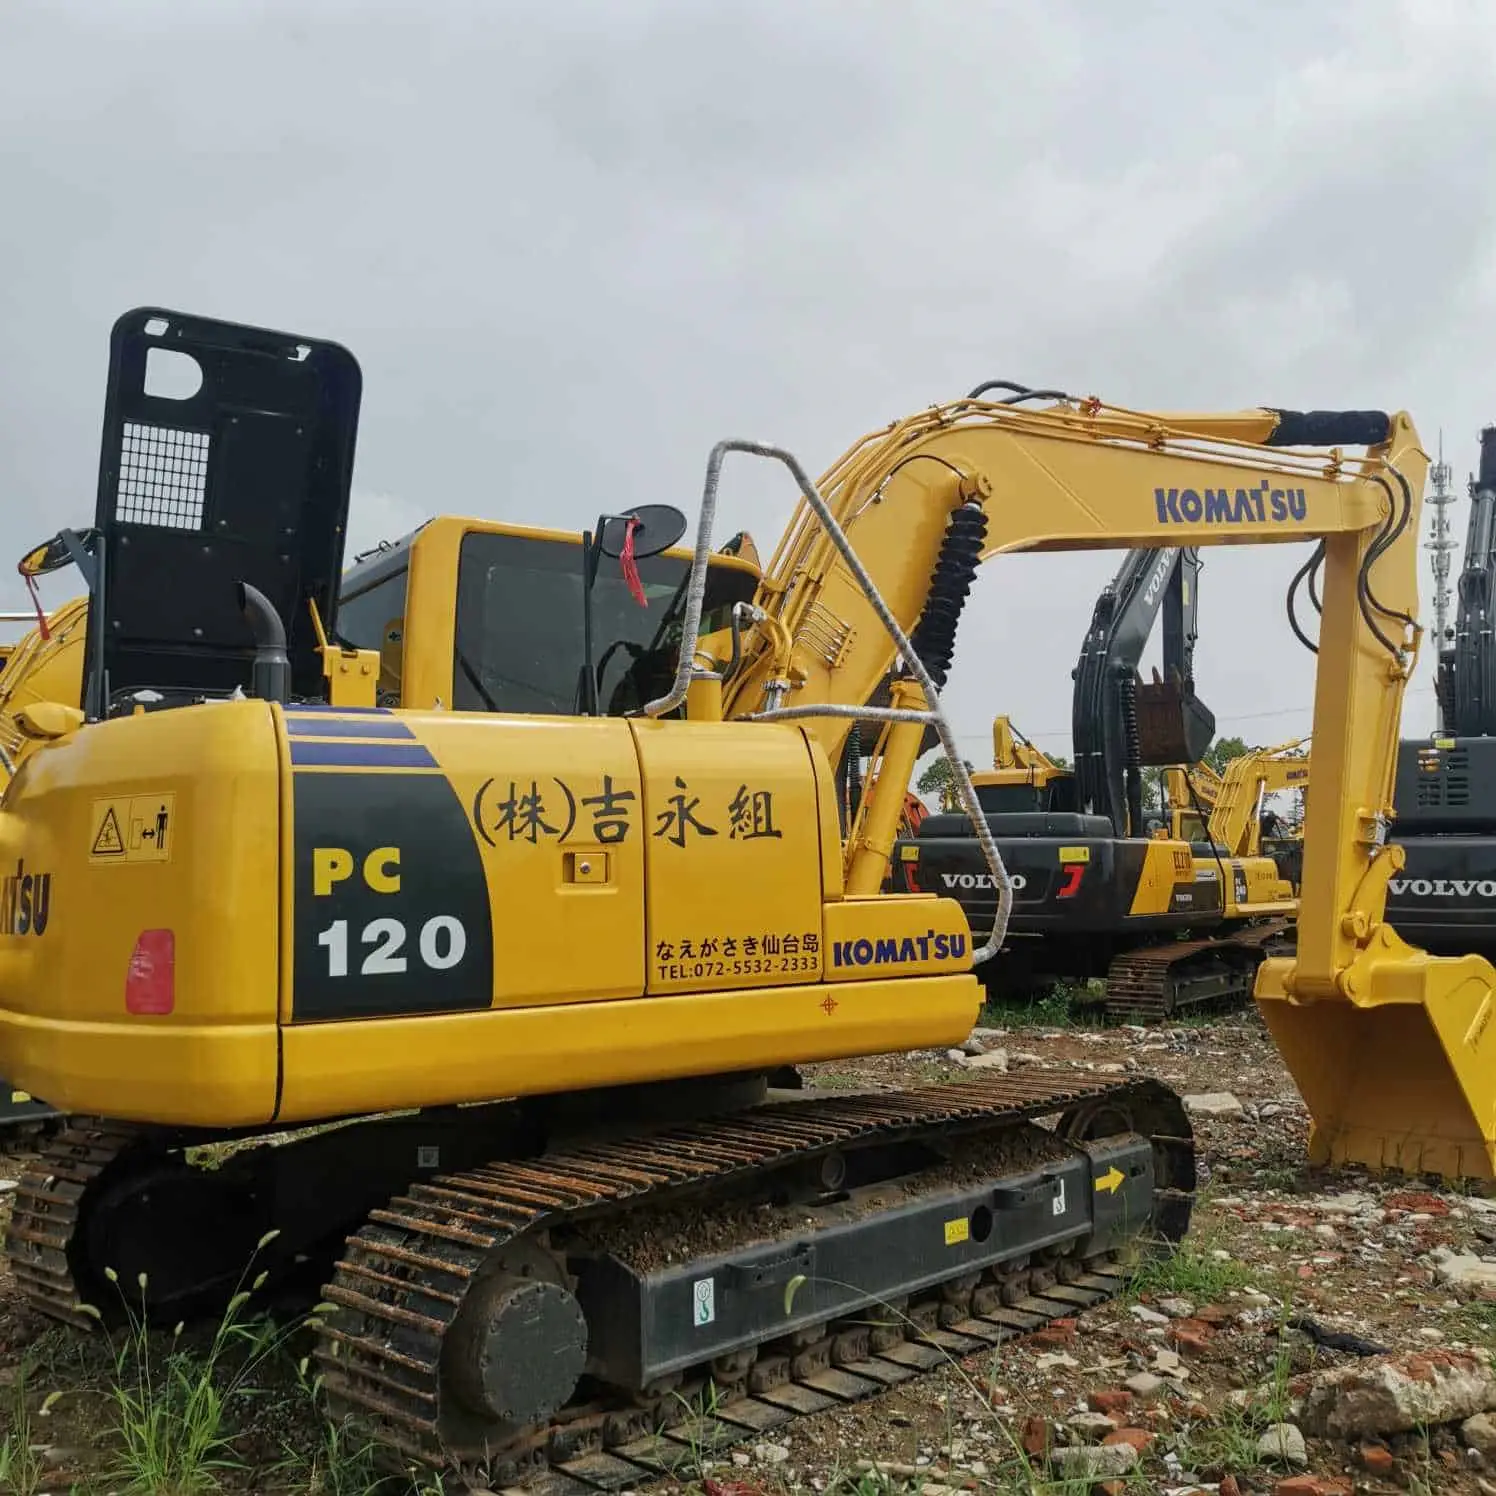 used Komatsu PC110 11ton excavators for sale